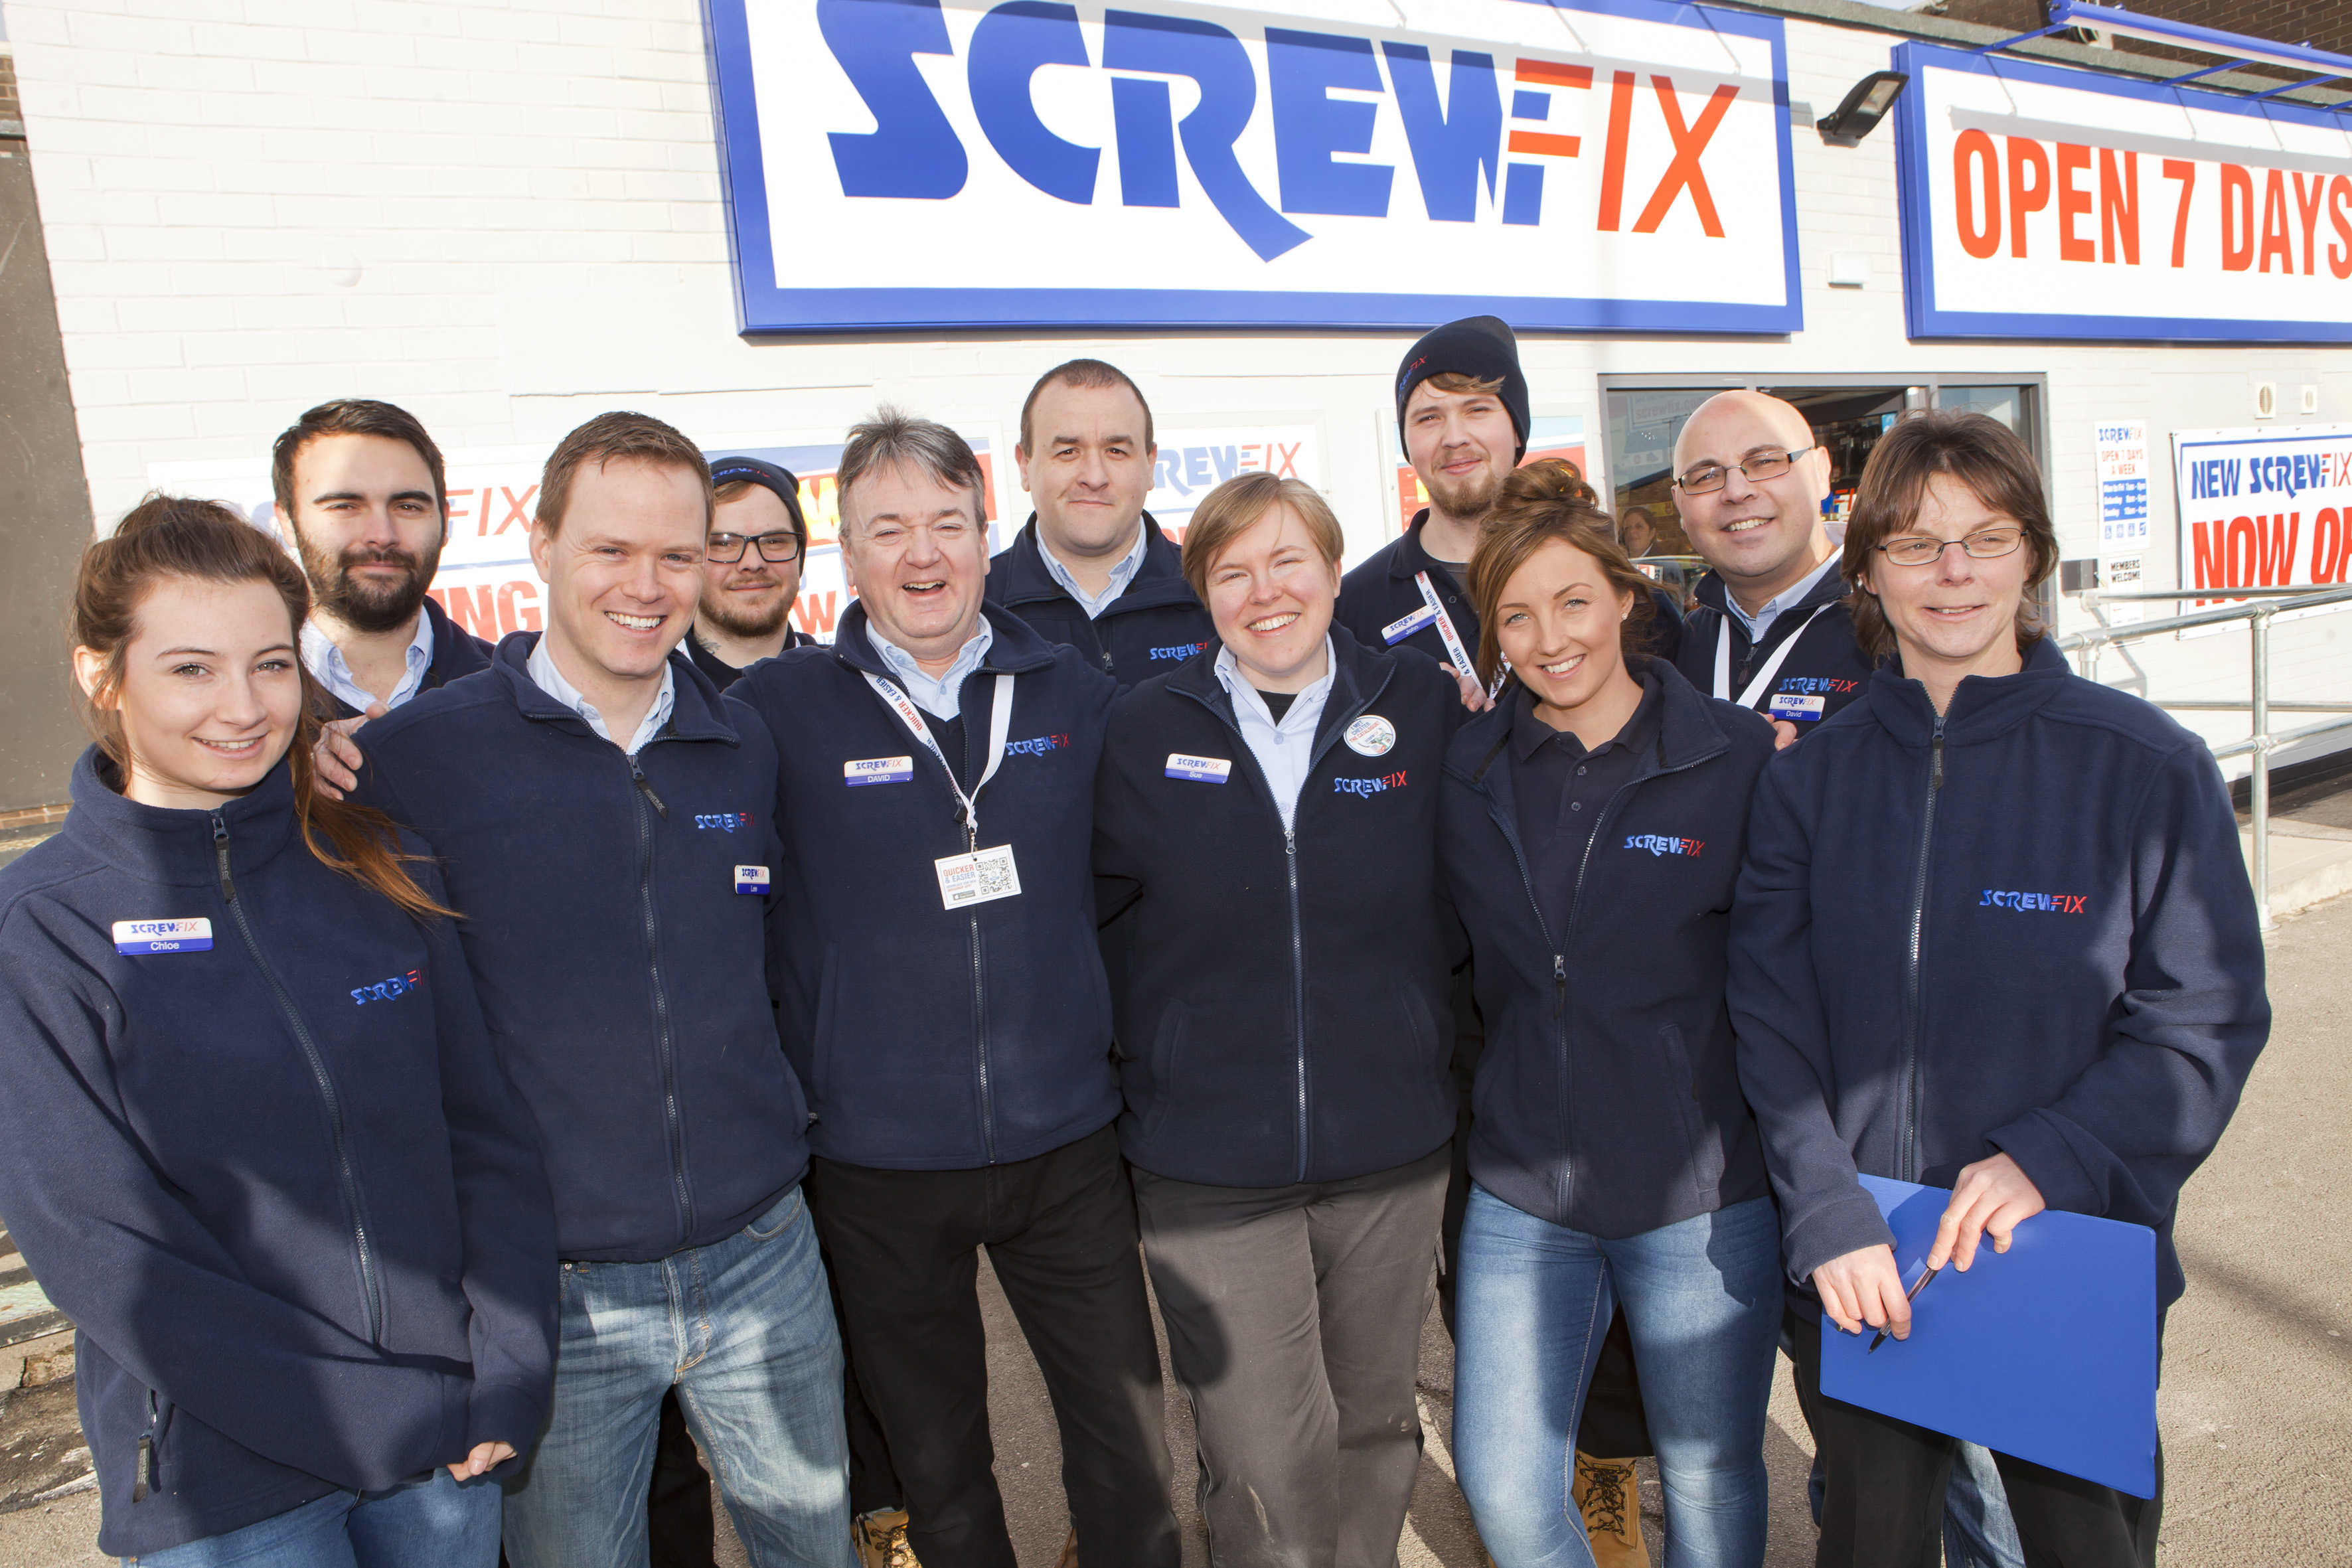 Bridlington’s first Screwfix store is declared a runaway success